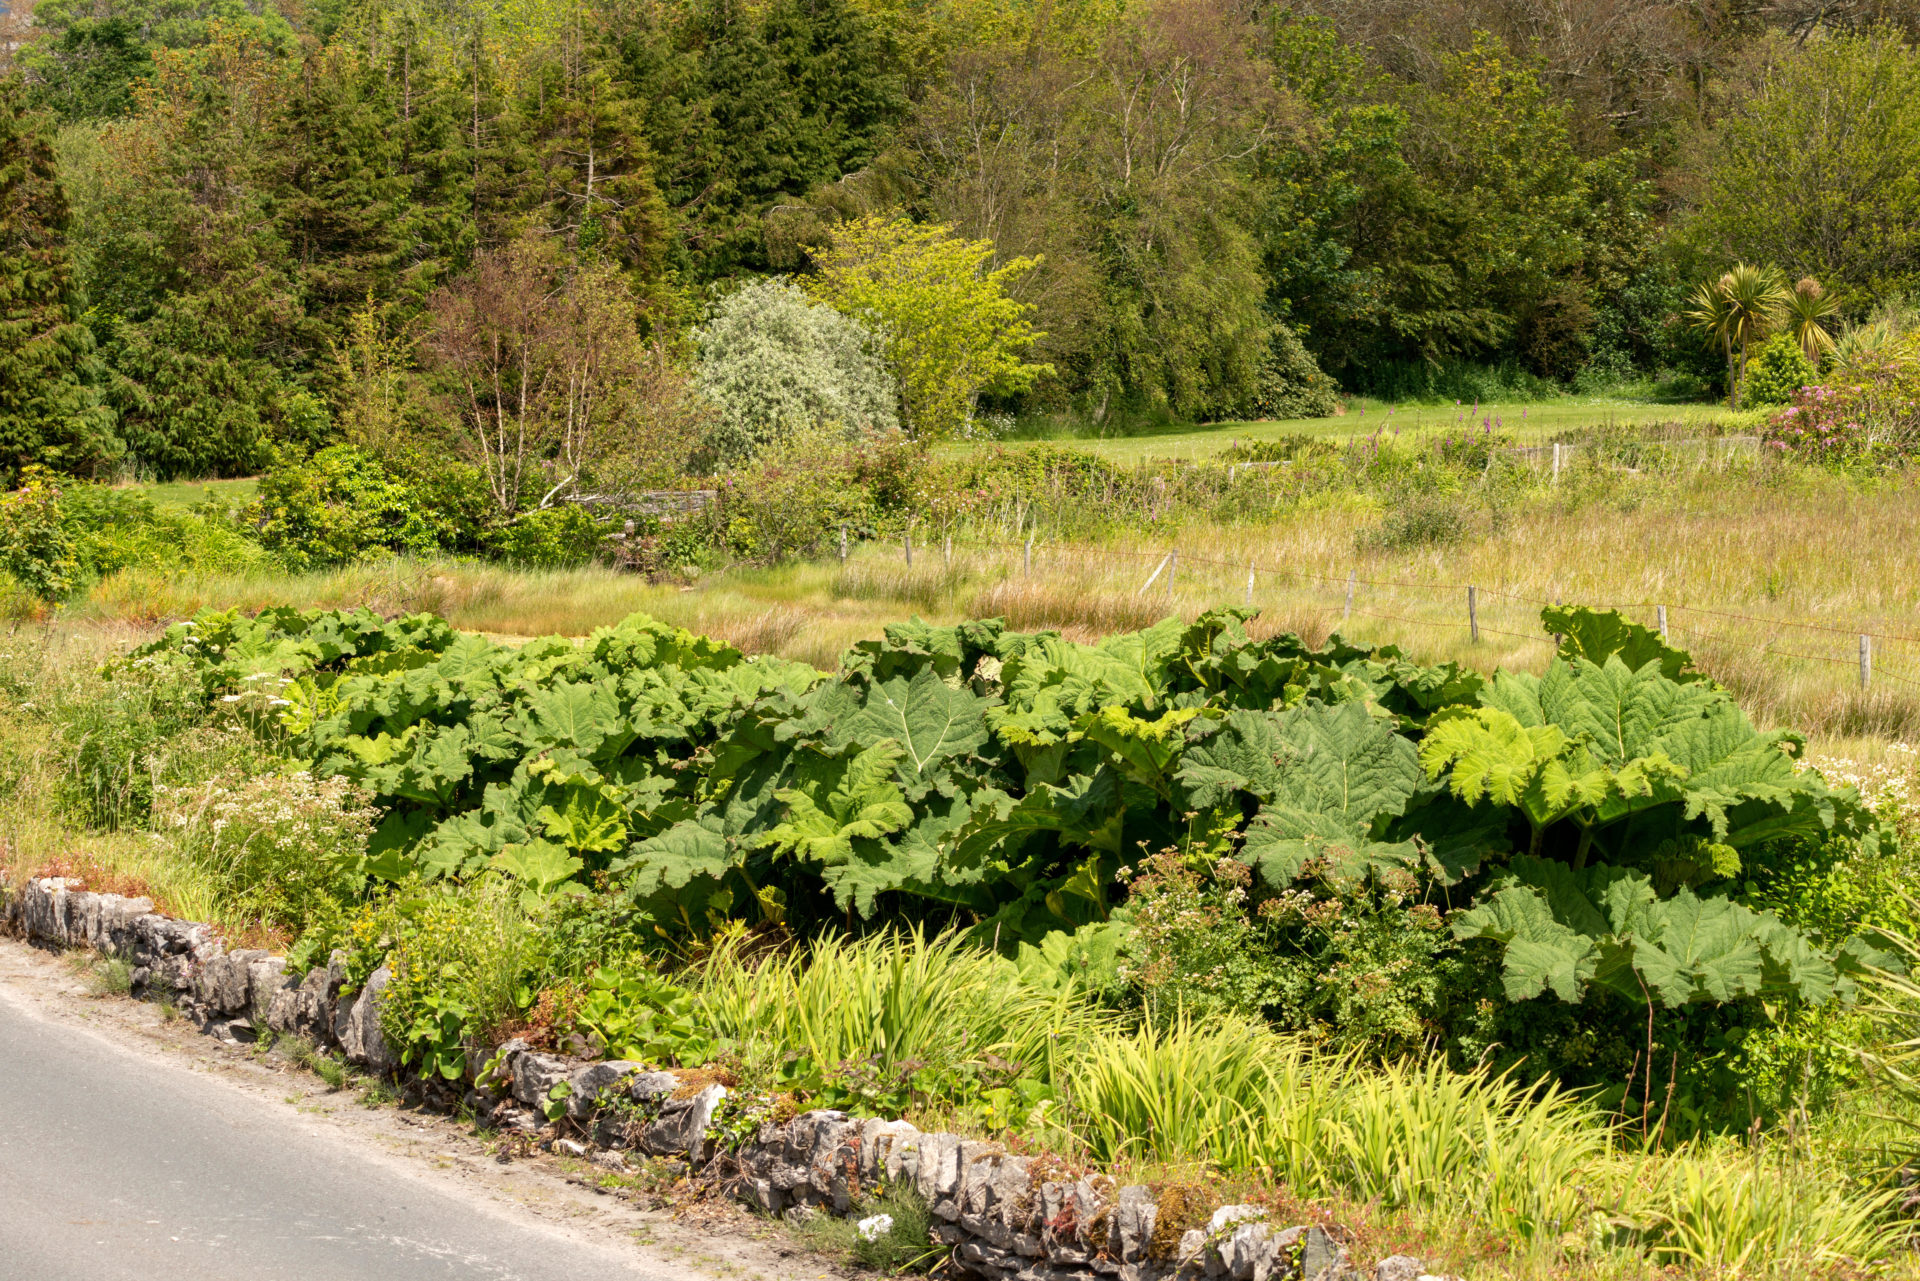 Giant Rhubarb, an alien invasive plant growing by roadside near Kenmare, County Kerry (Ognyan Trifonov / Alamy Stock Photo)